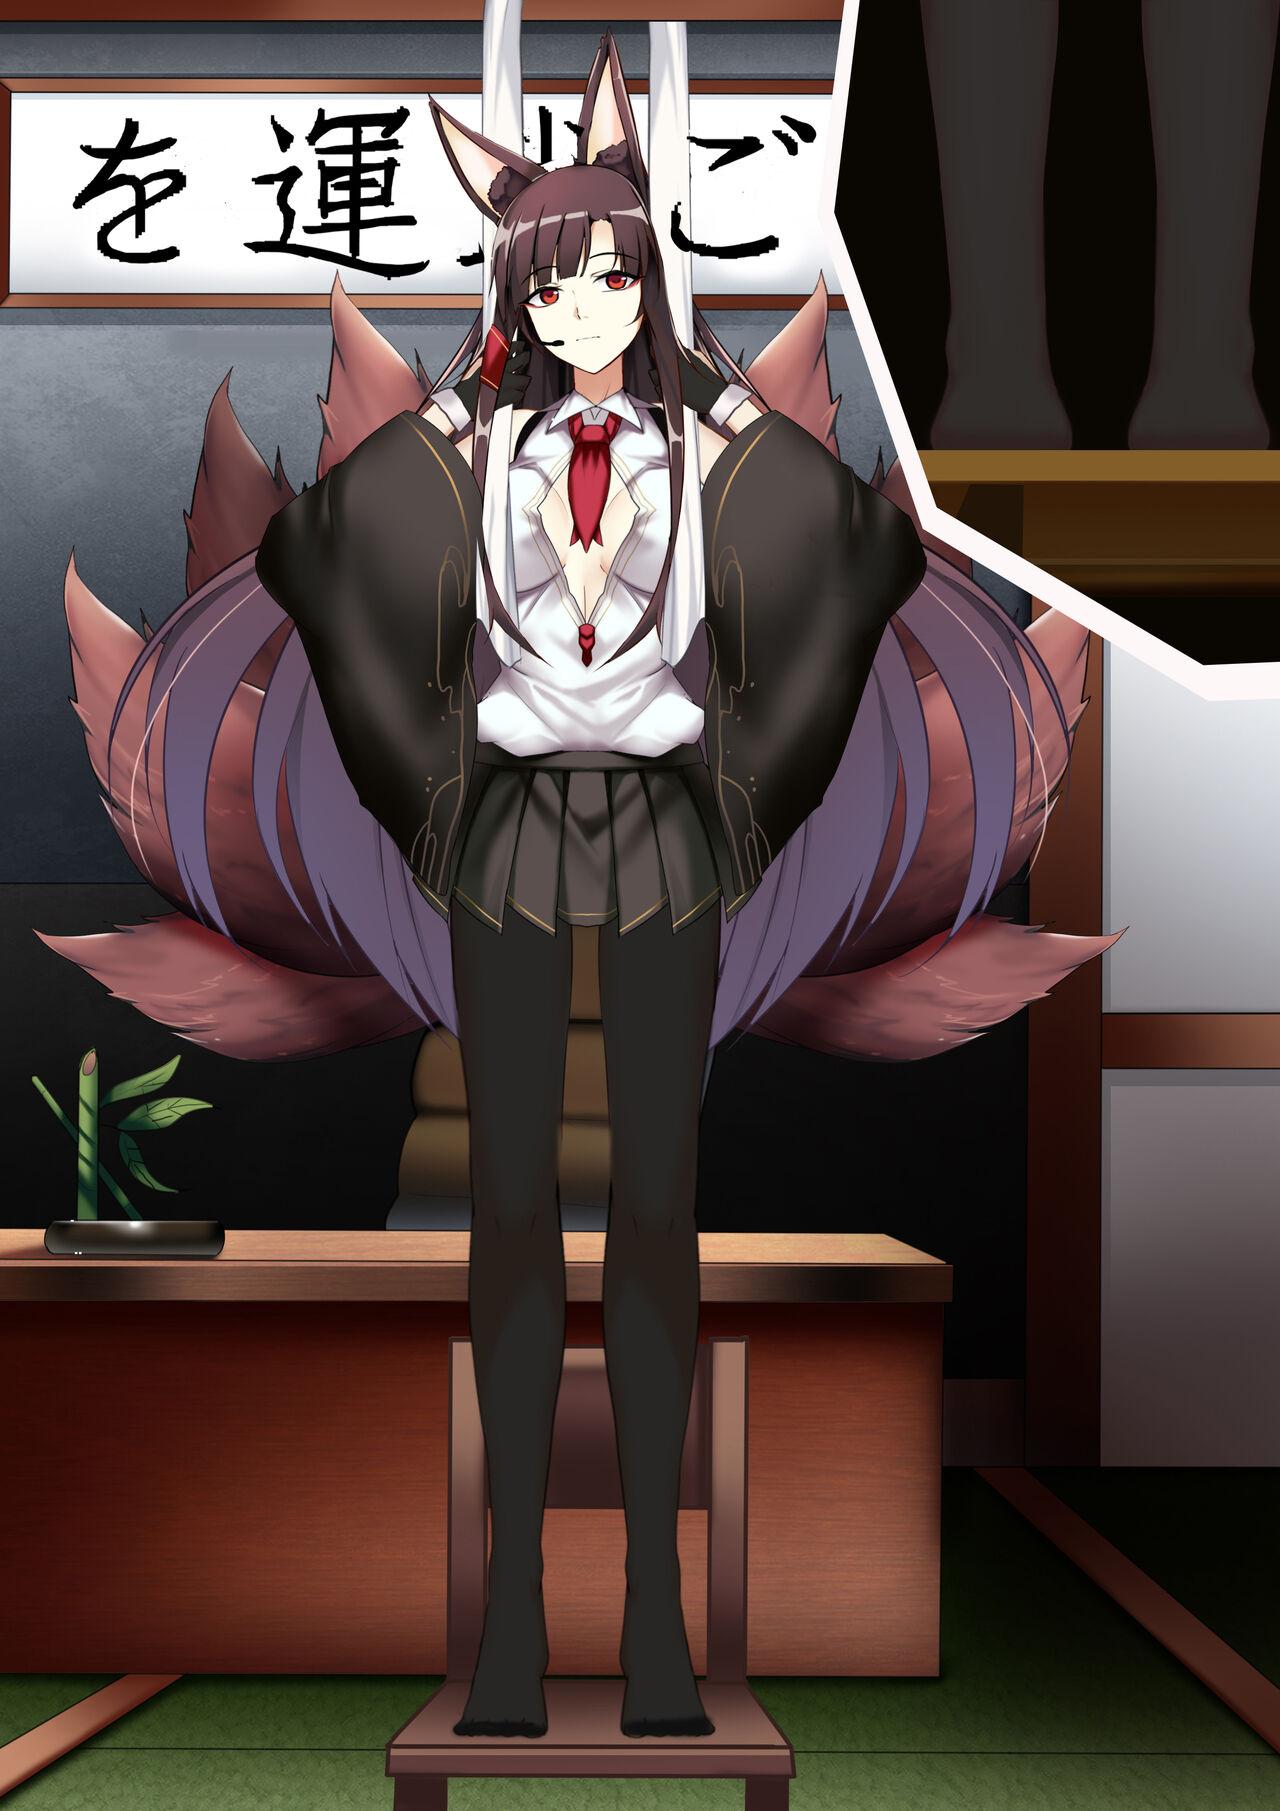 Akagi hanged herself in her office 27